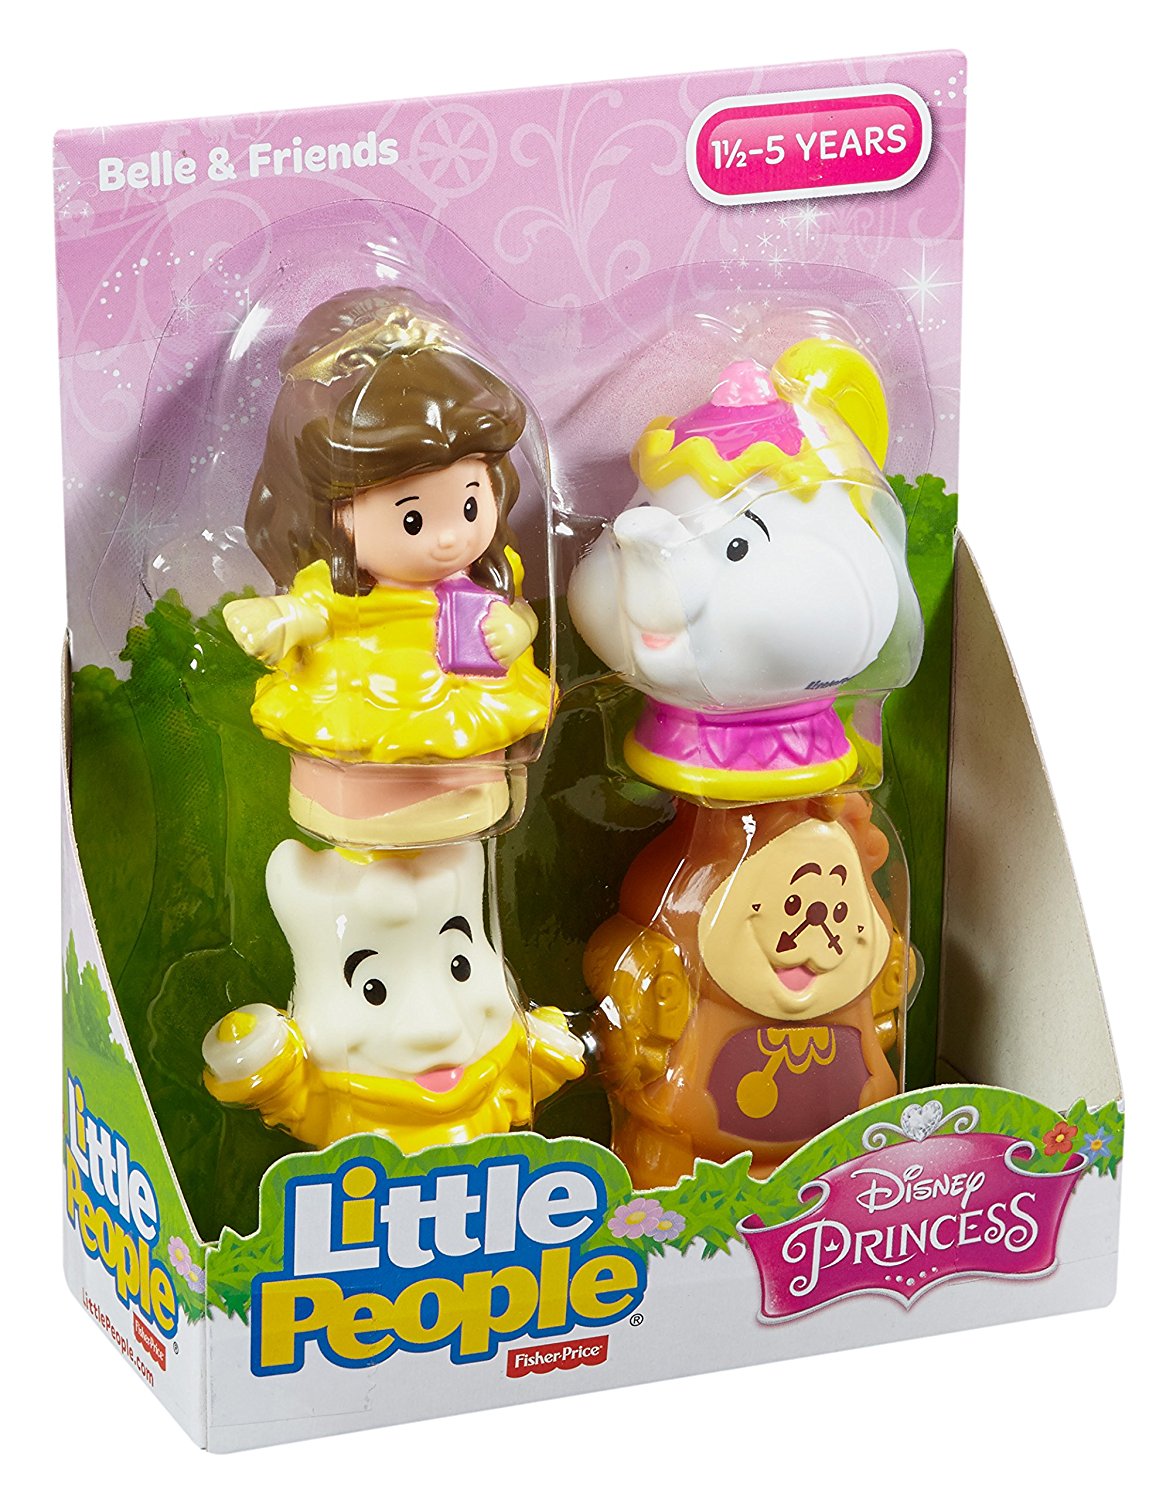 Low Price On FisherPrice Little People Disney Princess